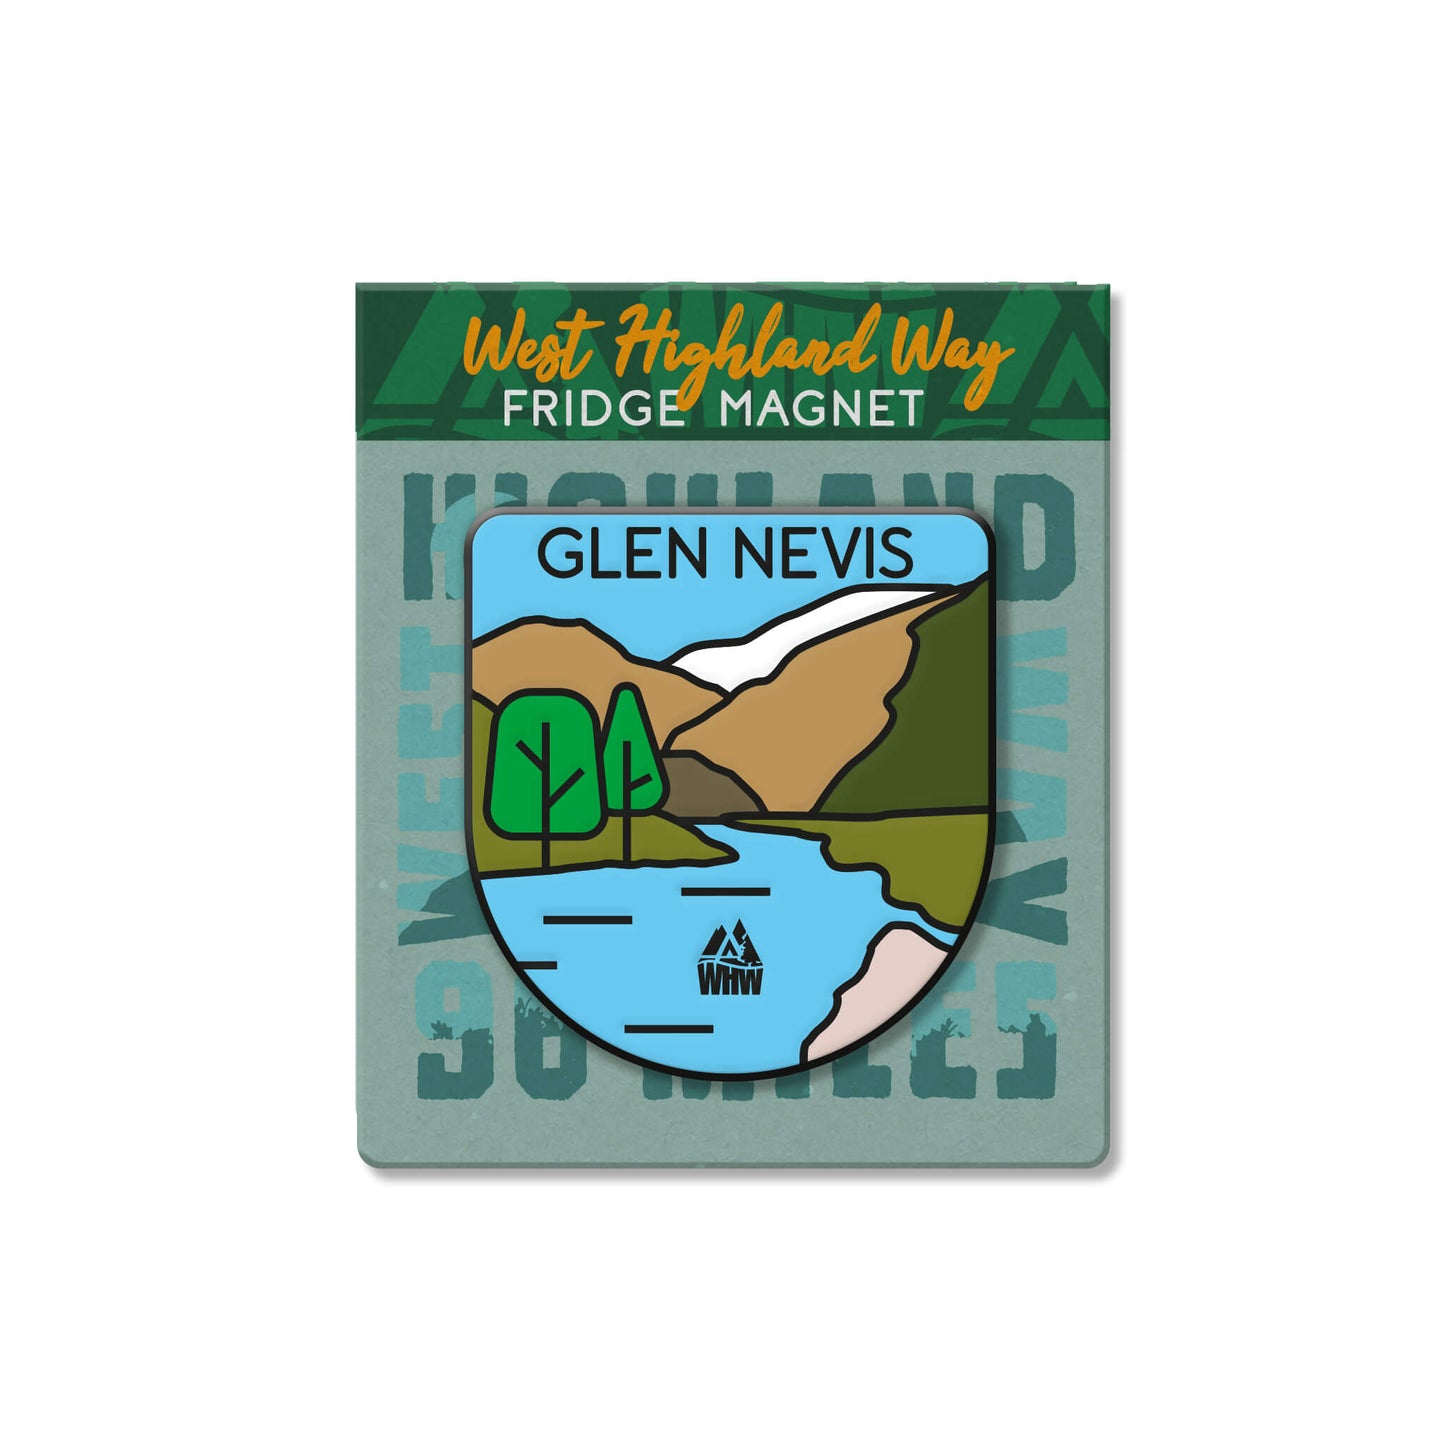 Glen Nevis Fridge Magnet - West Highland Way